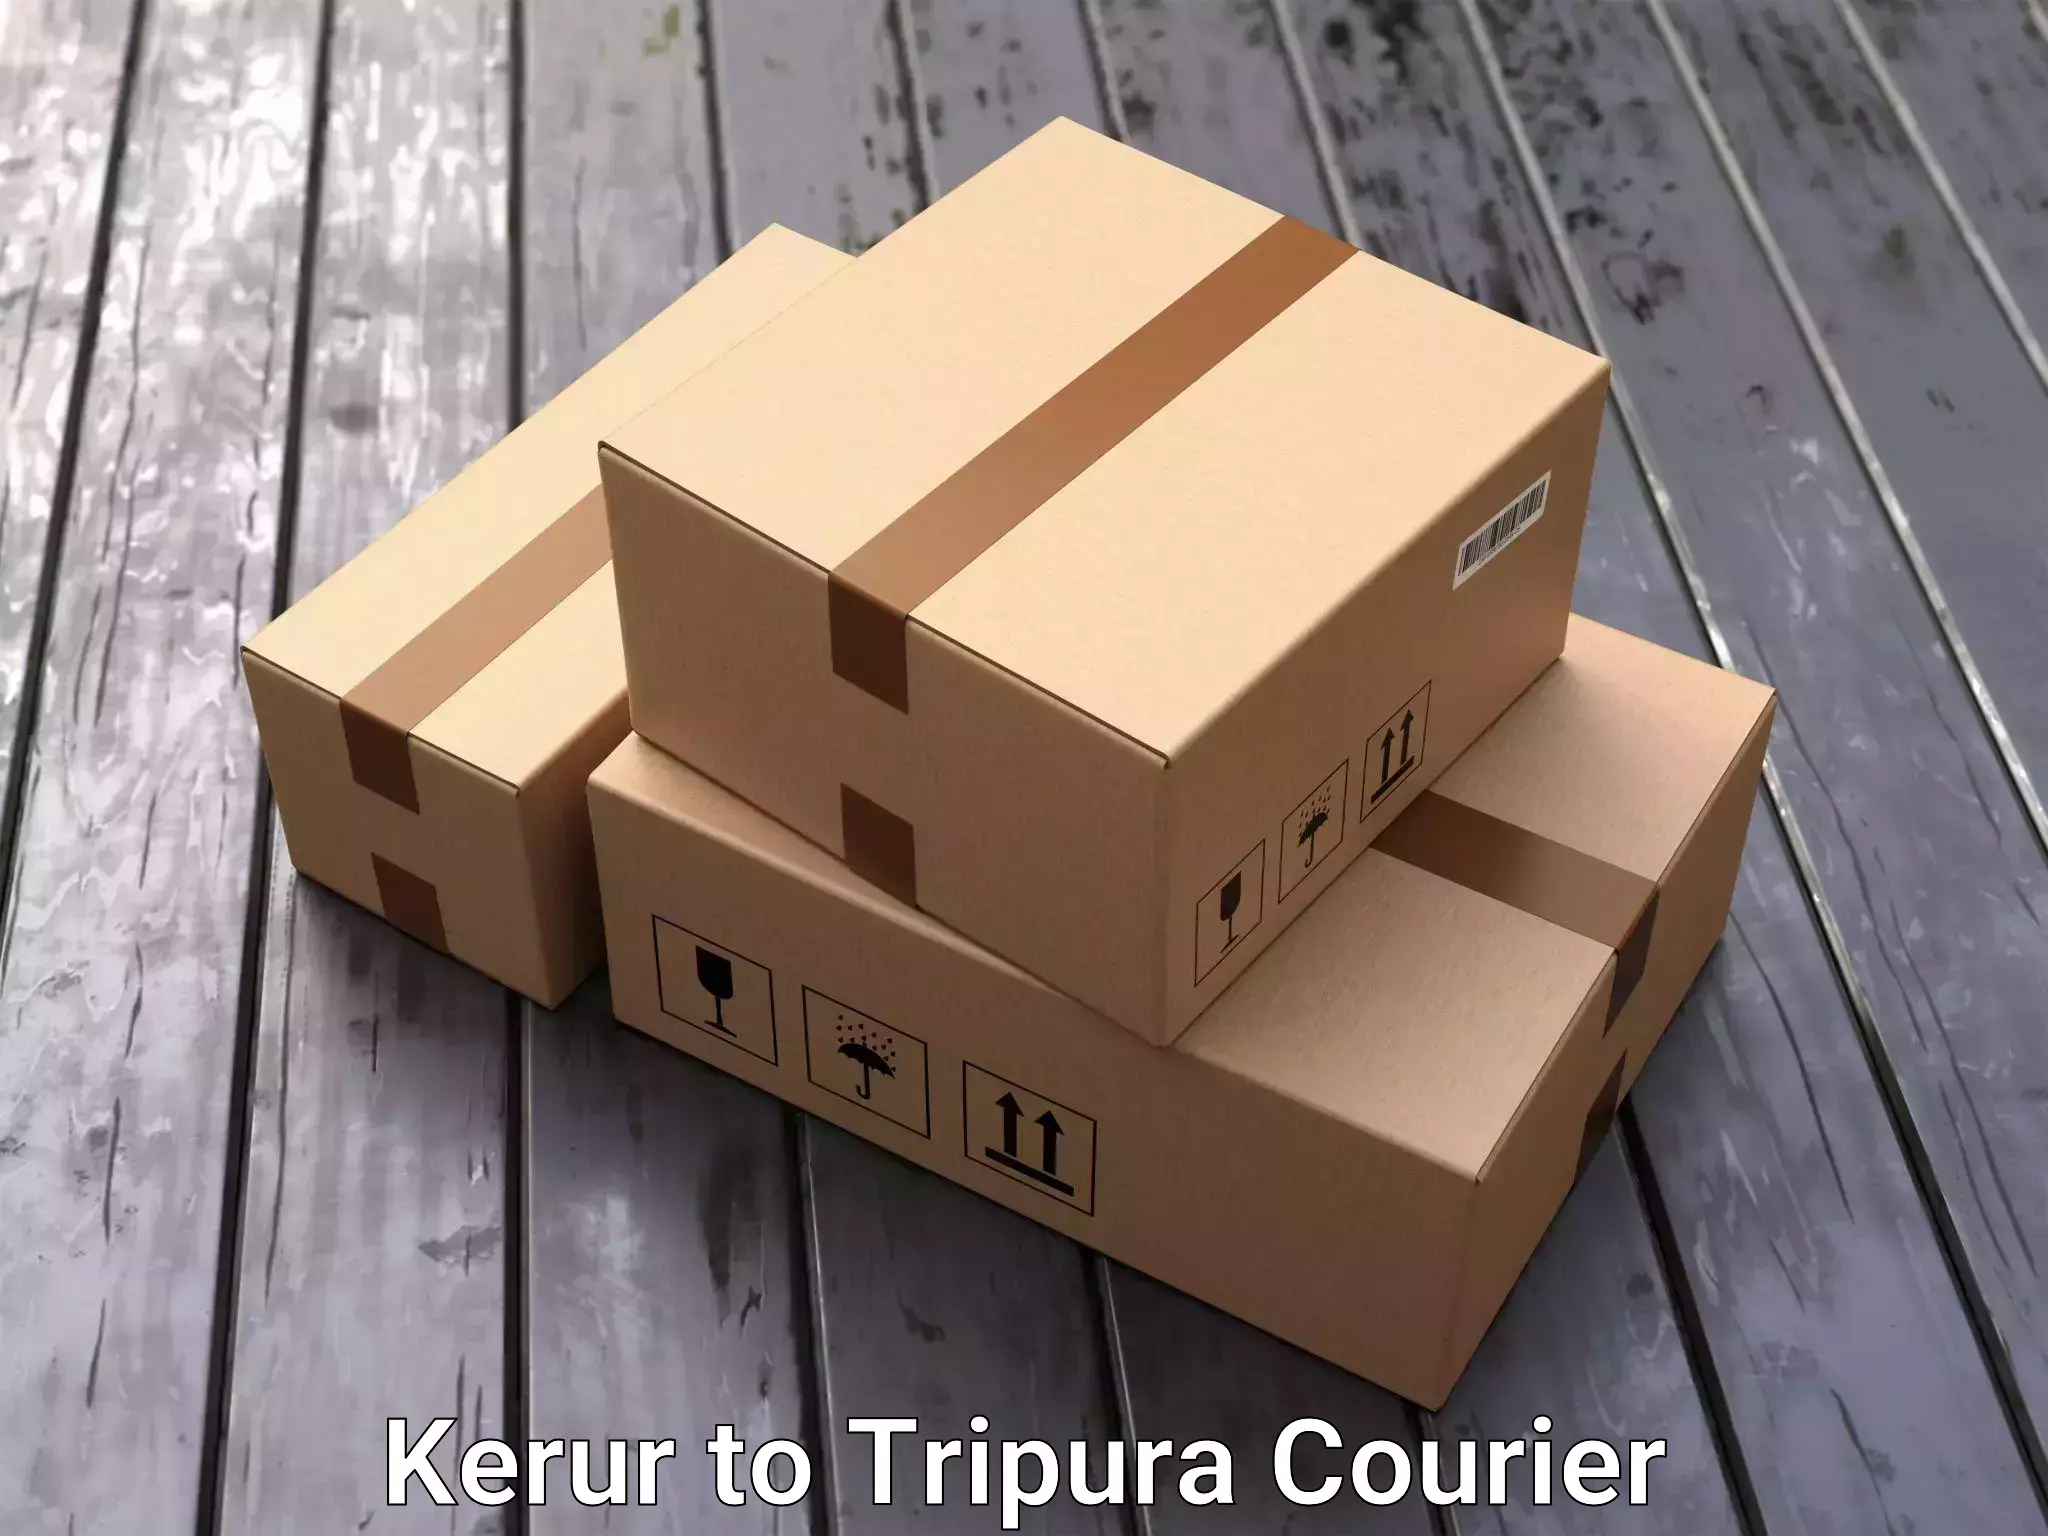 Professional home relocation Kerur to Udaipur Tripura